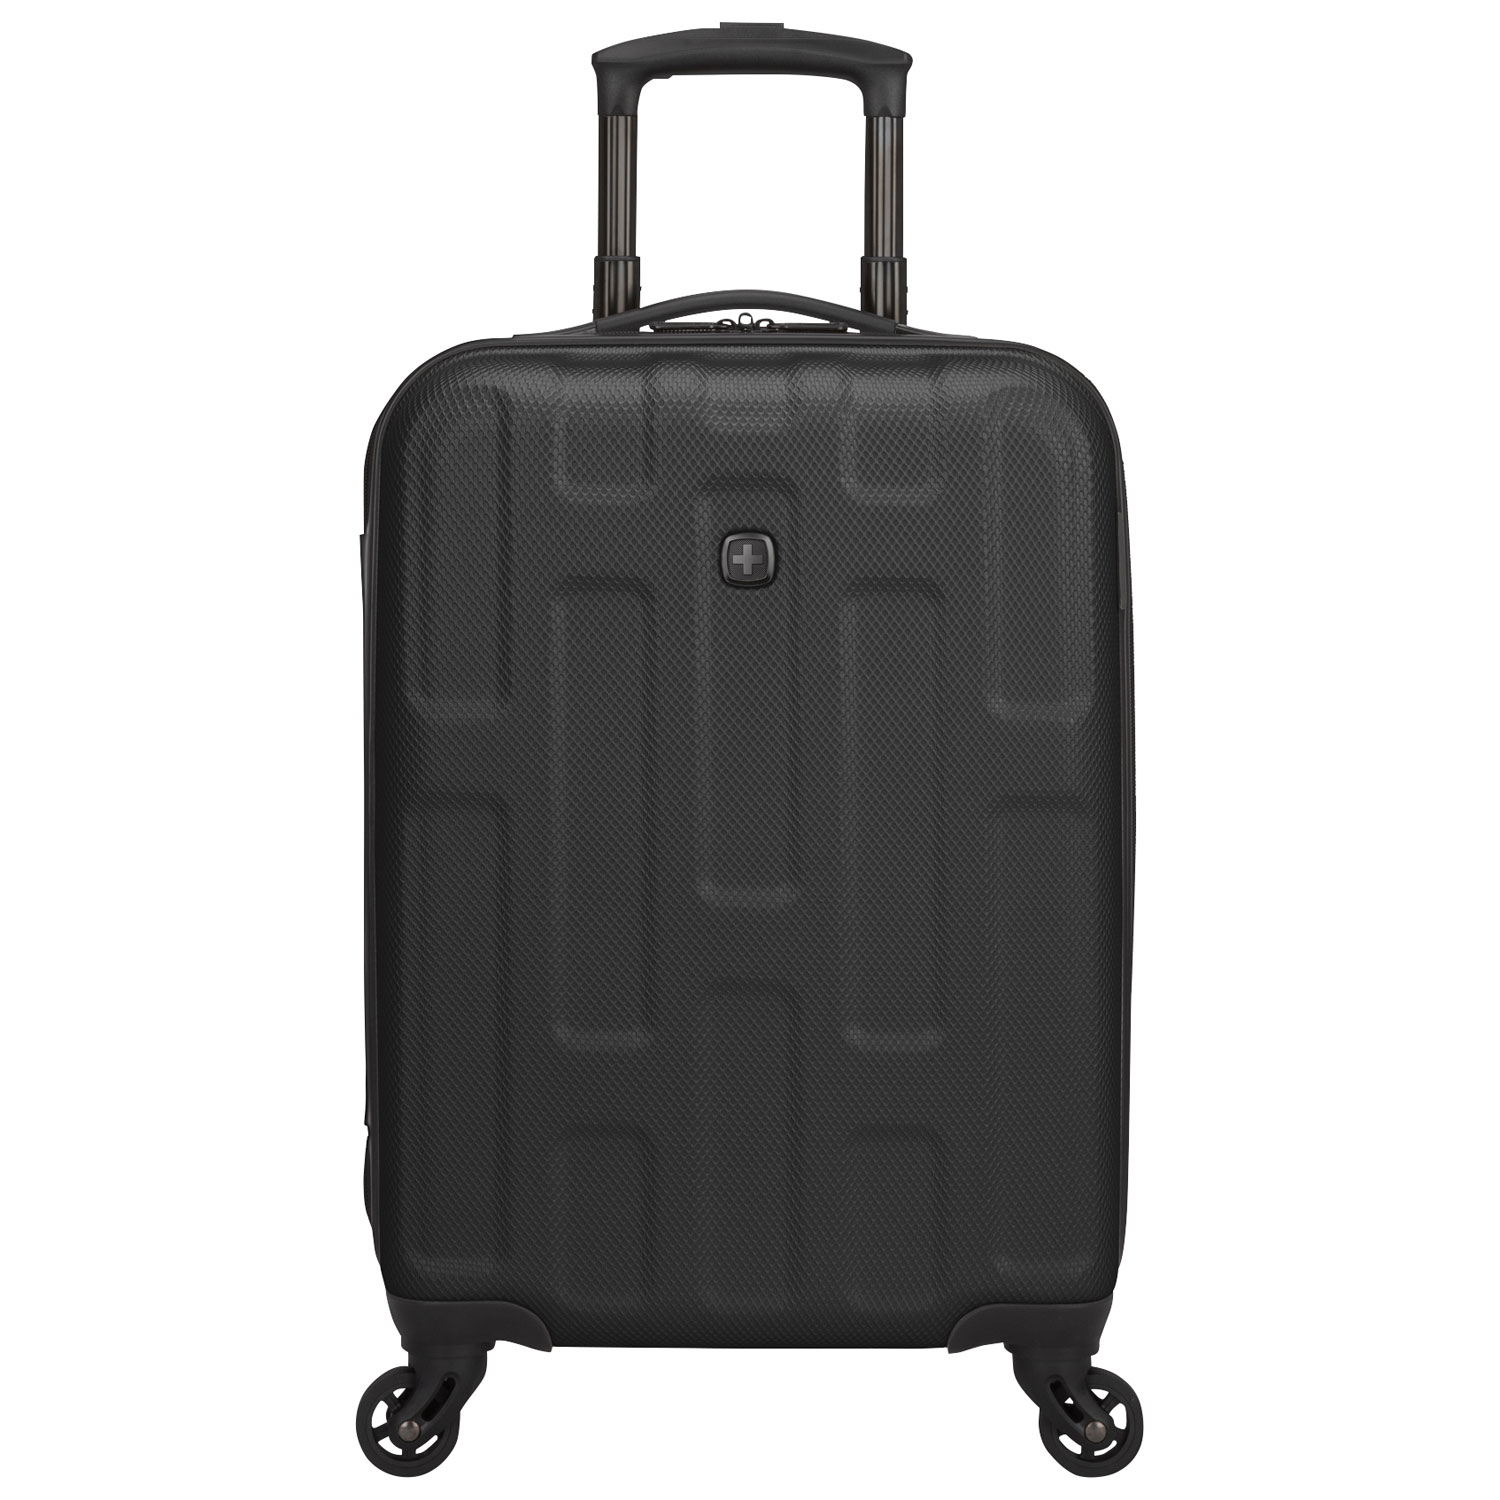 SWISSGEAR Spring Break 3-Piece Hard Side Expandable Luggage Set - Black